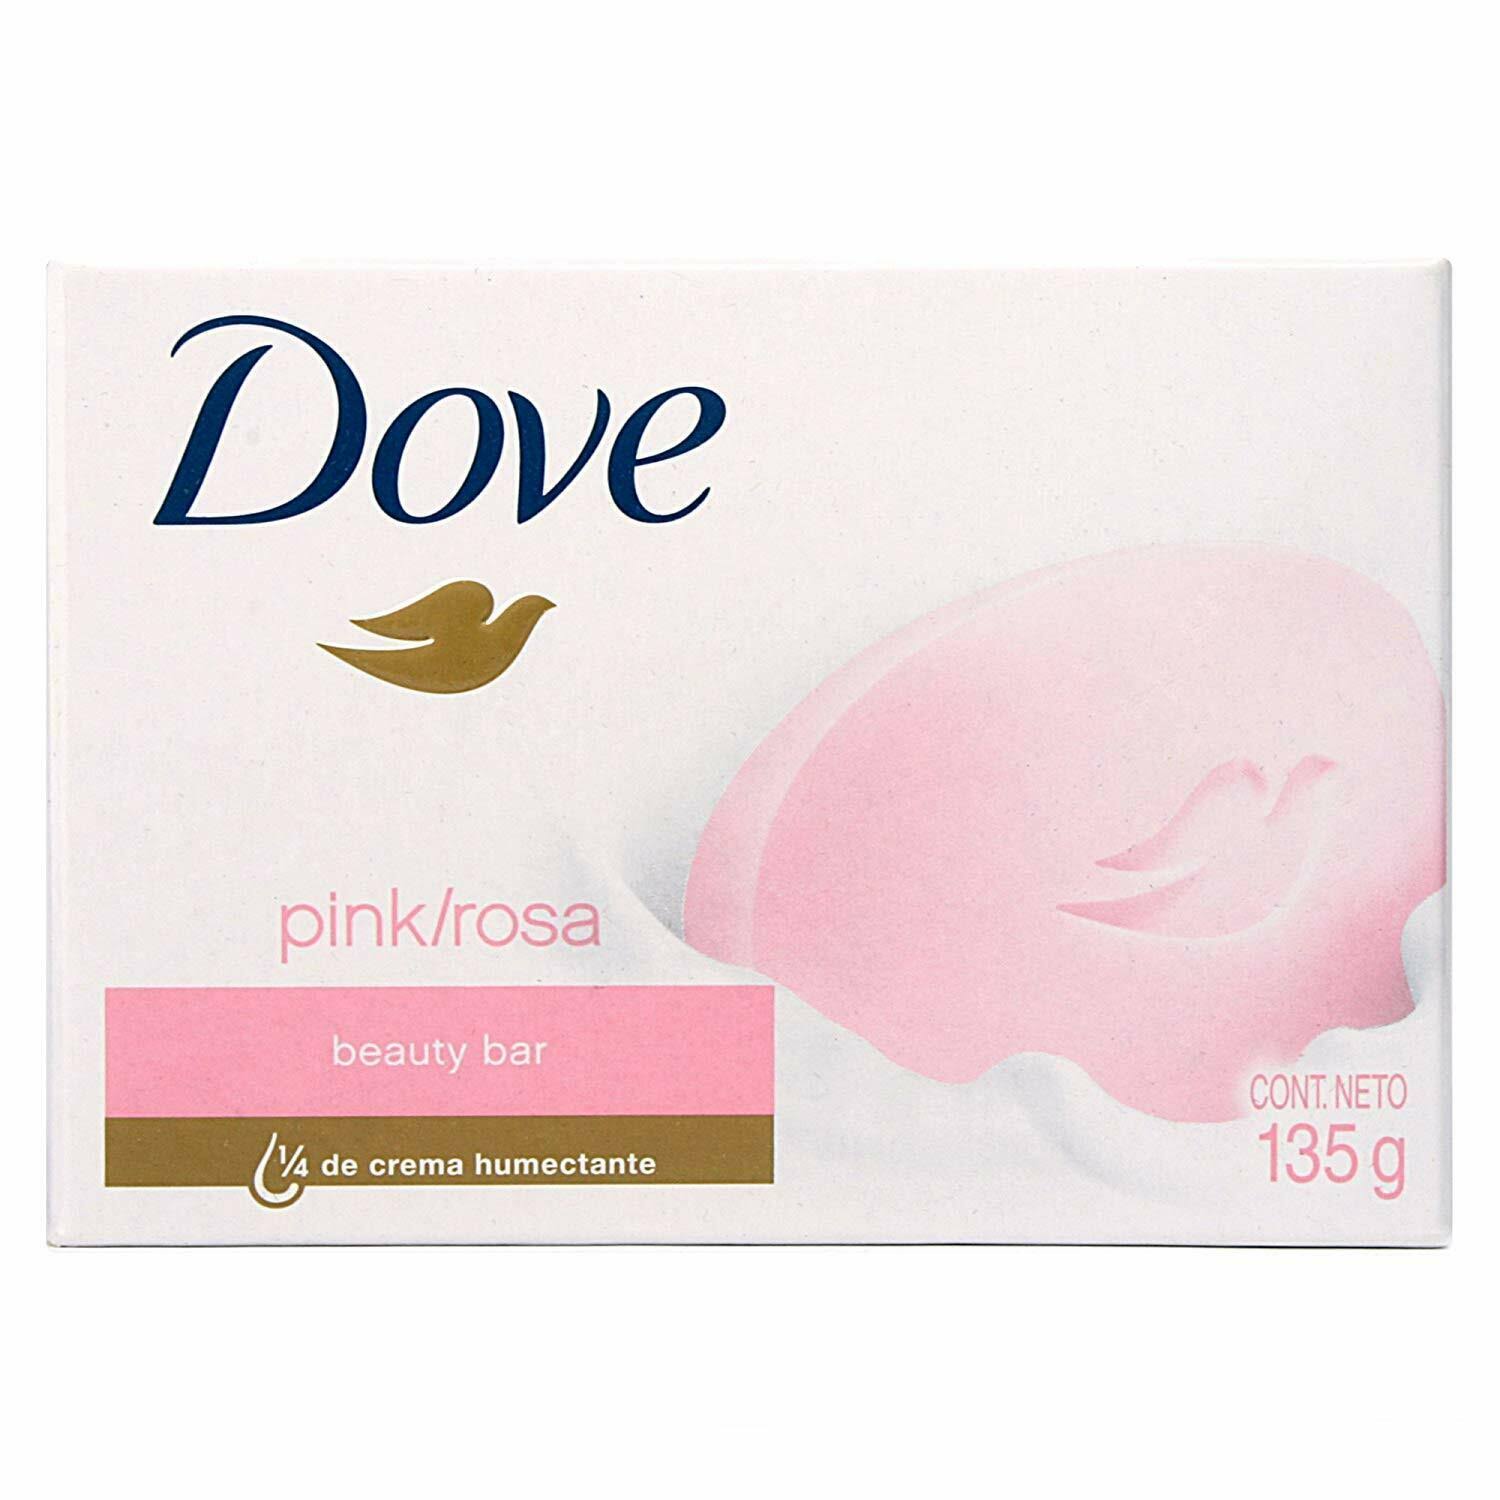 Dove Pink Rosa Beauty Bar - 135g